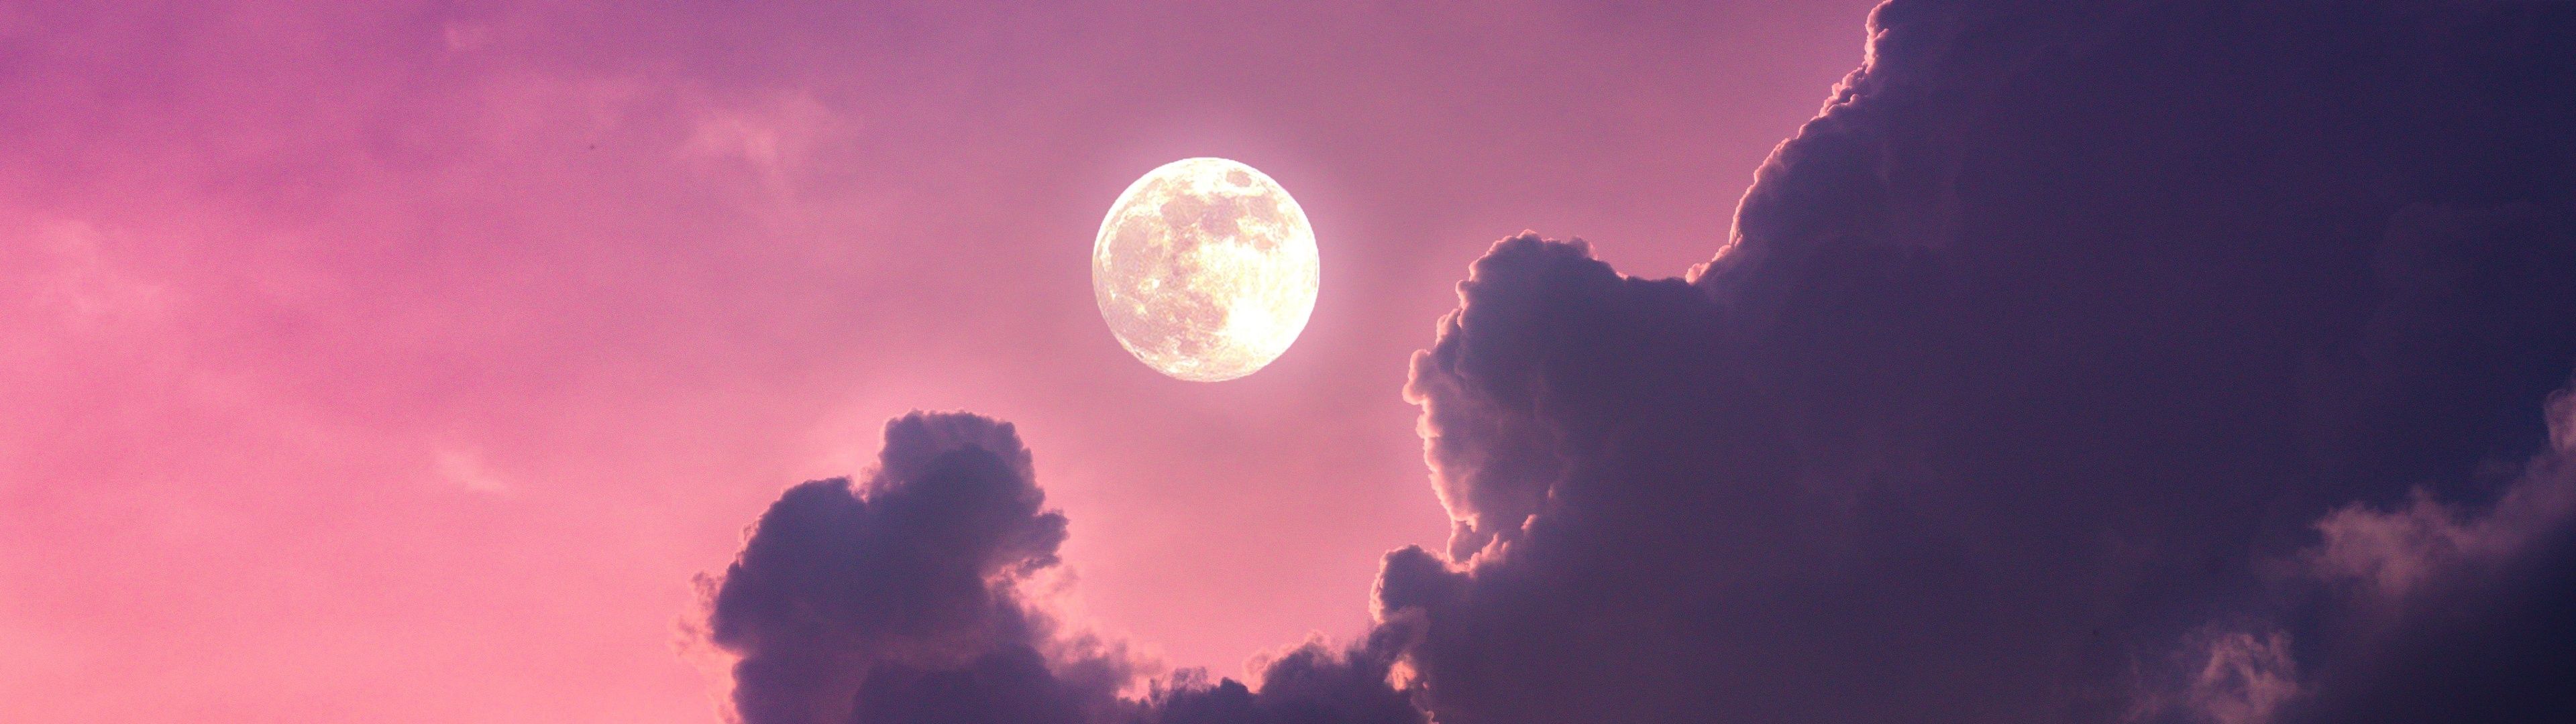  3840x1080 Hintergrundbild 3840x1080. Full moon Wallpaper 4K, Aesthetic, Clouds, Pink sky